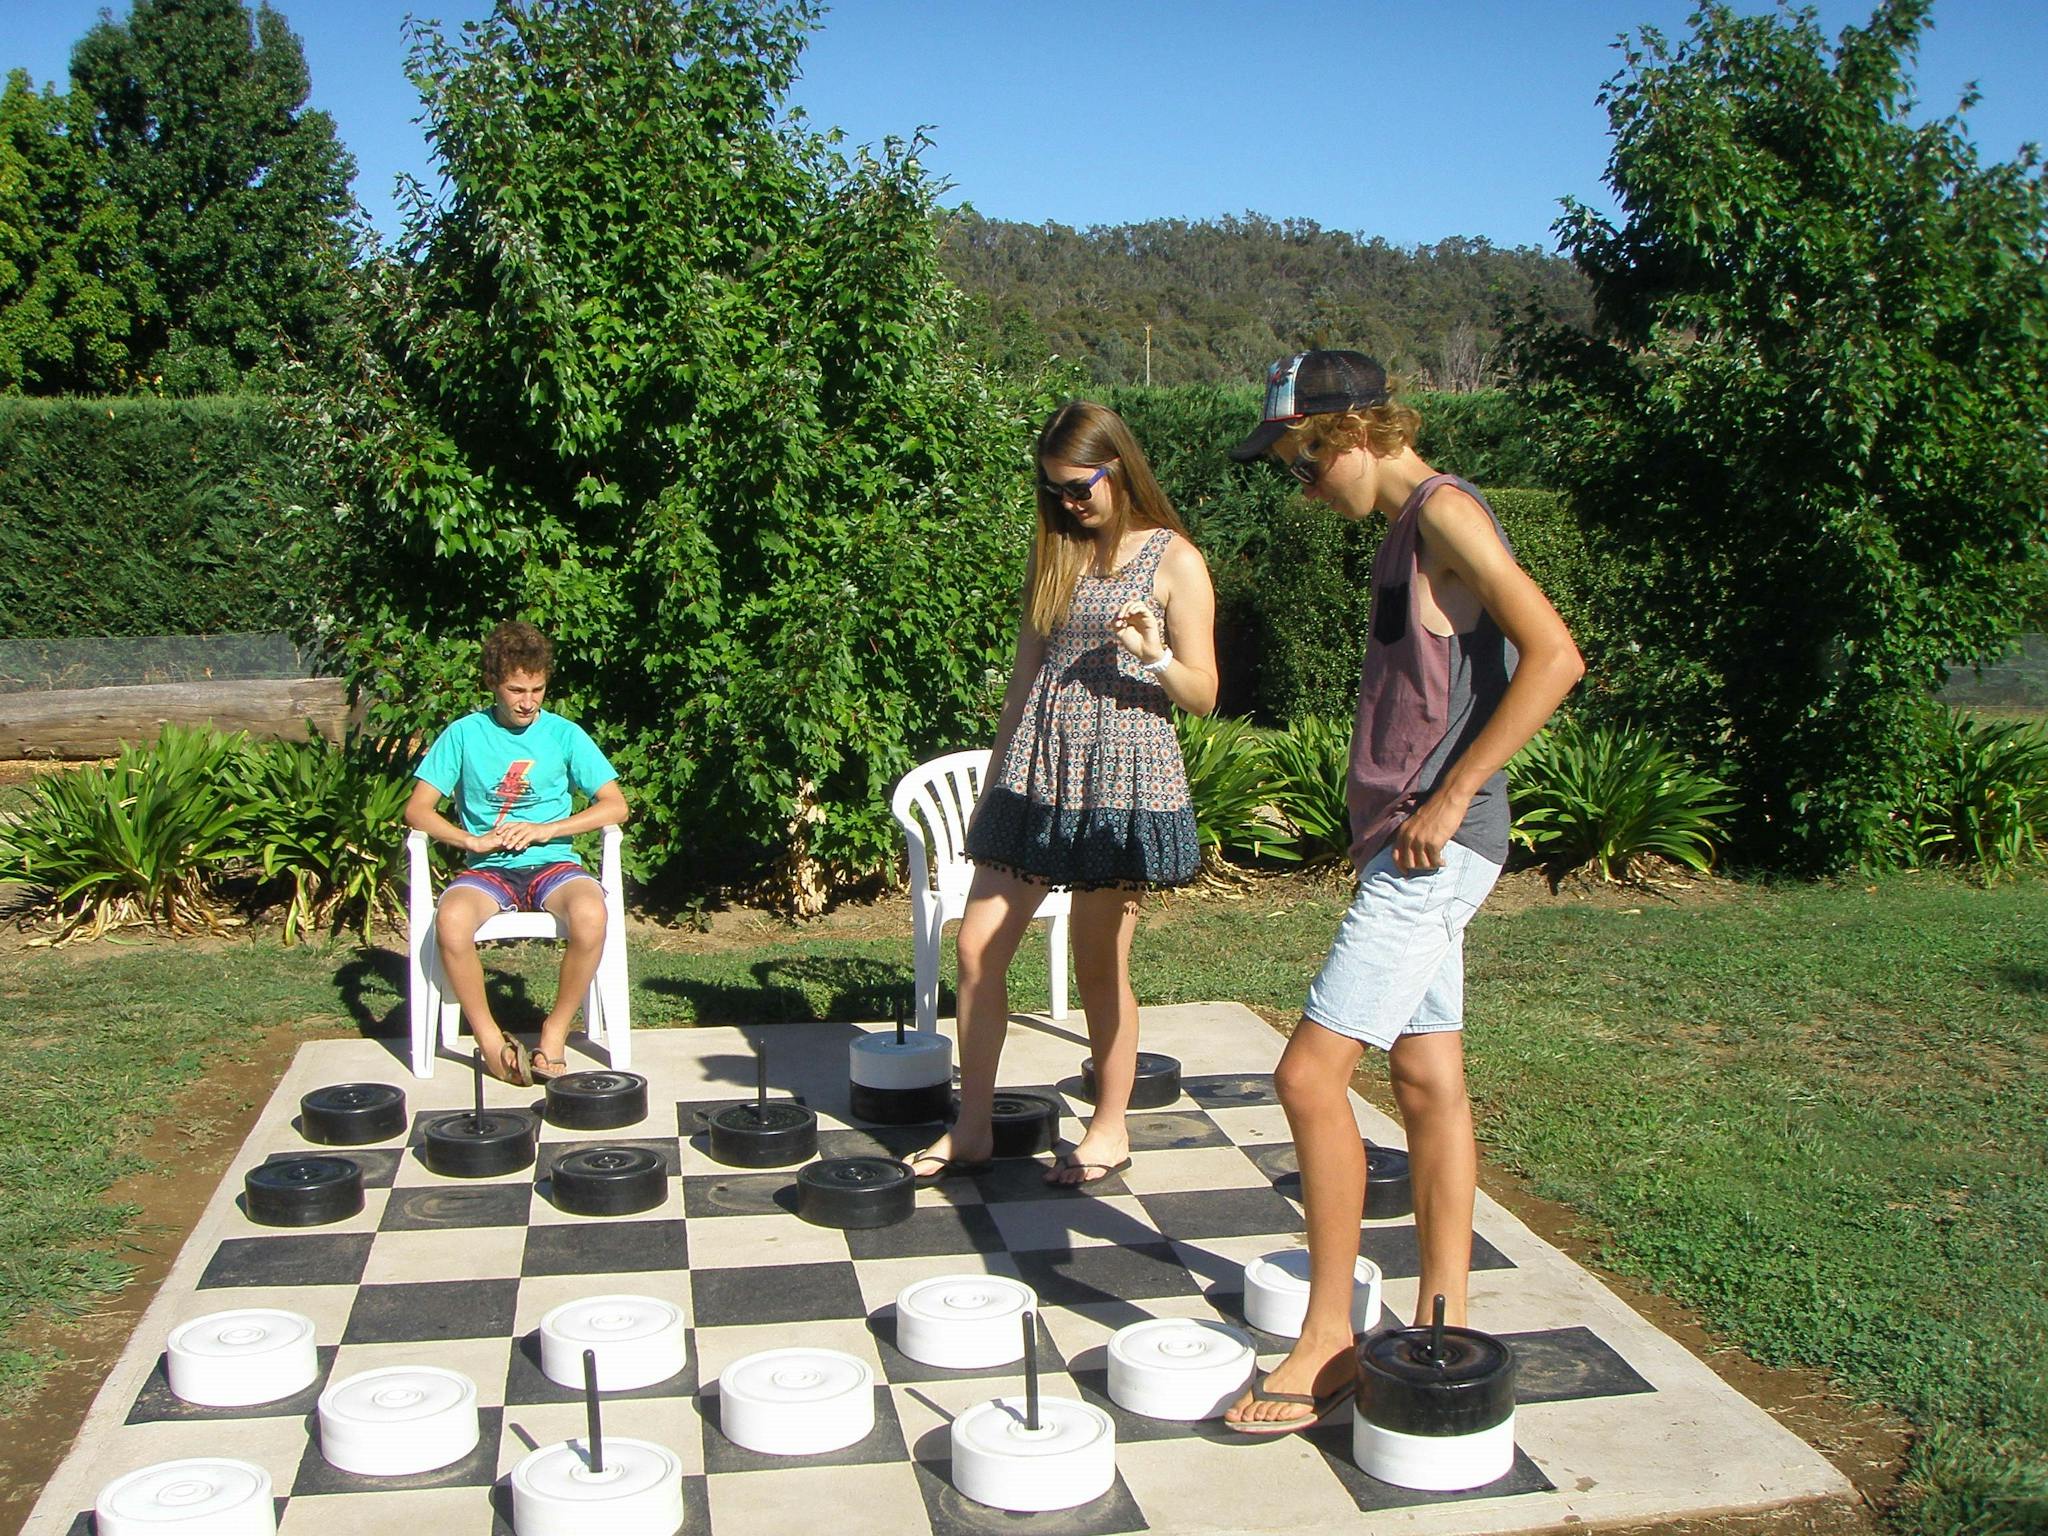 Brookfield Maze Checkers